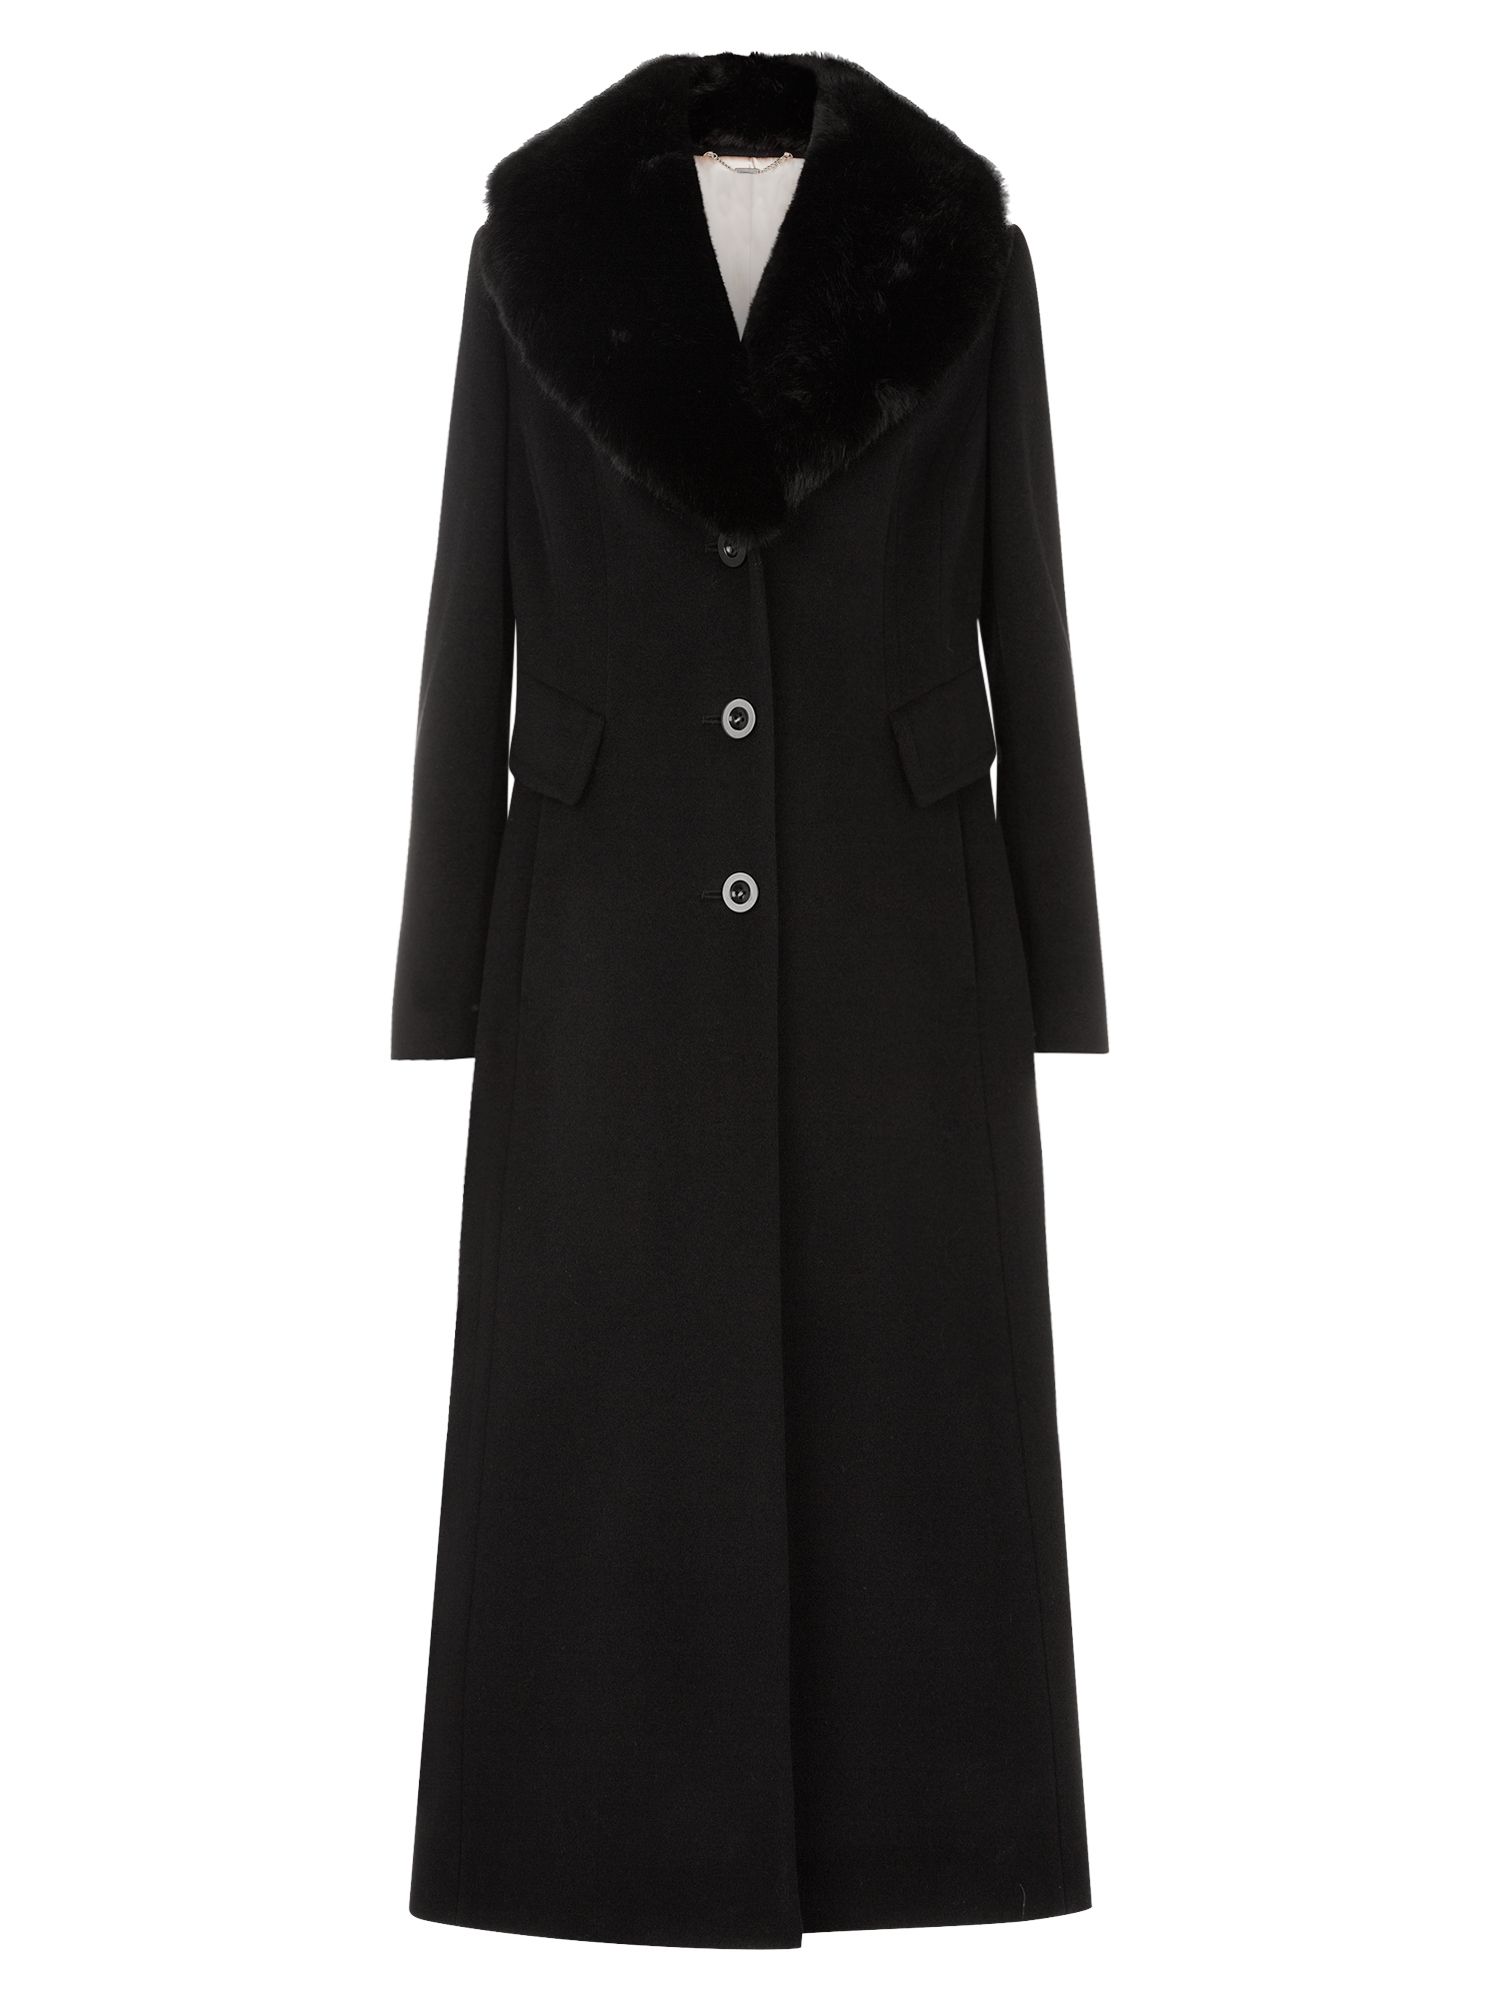 Jacques Vert Fur Collar Coat, Black at John Lewis & Partners